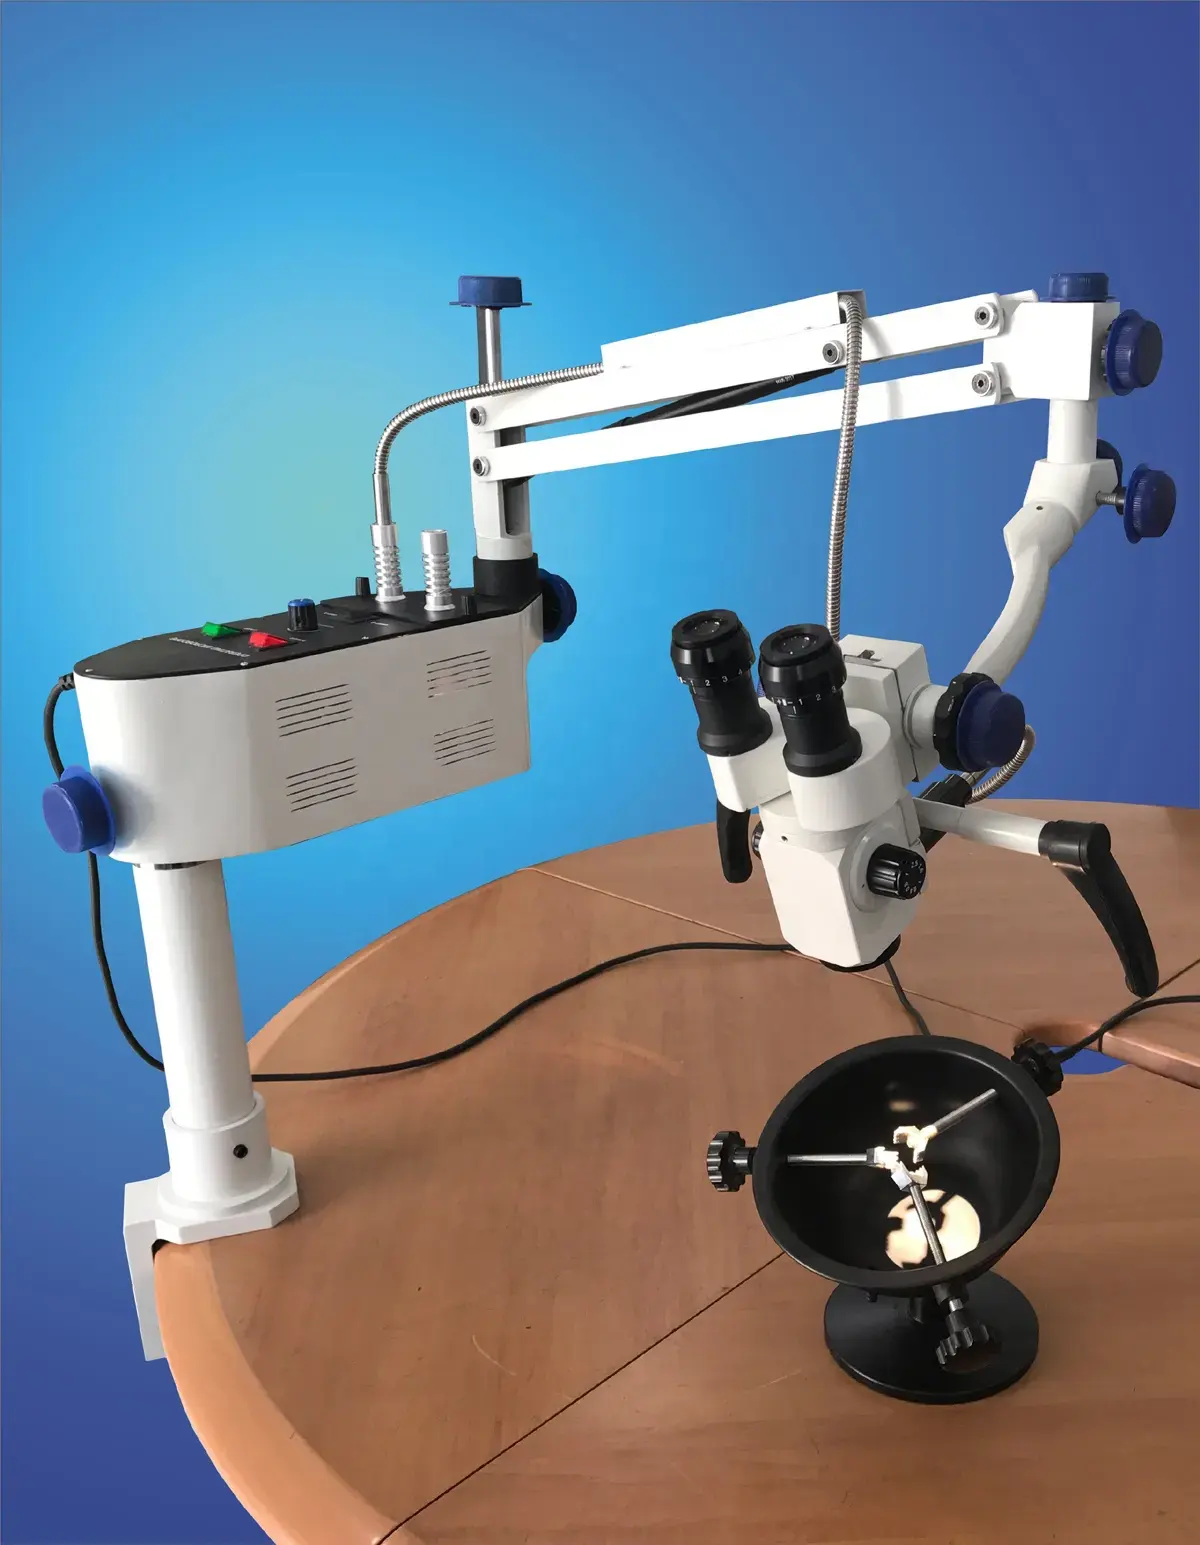 Mikroskop disction stasiun kerja, manufaktur Sains & bedah kualitas 5 langkah tujuan pendidikan tulang TEMPORAL